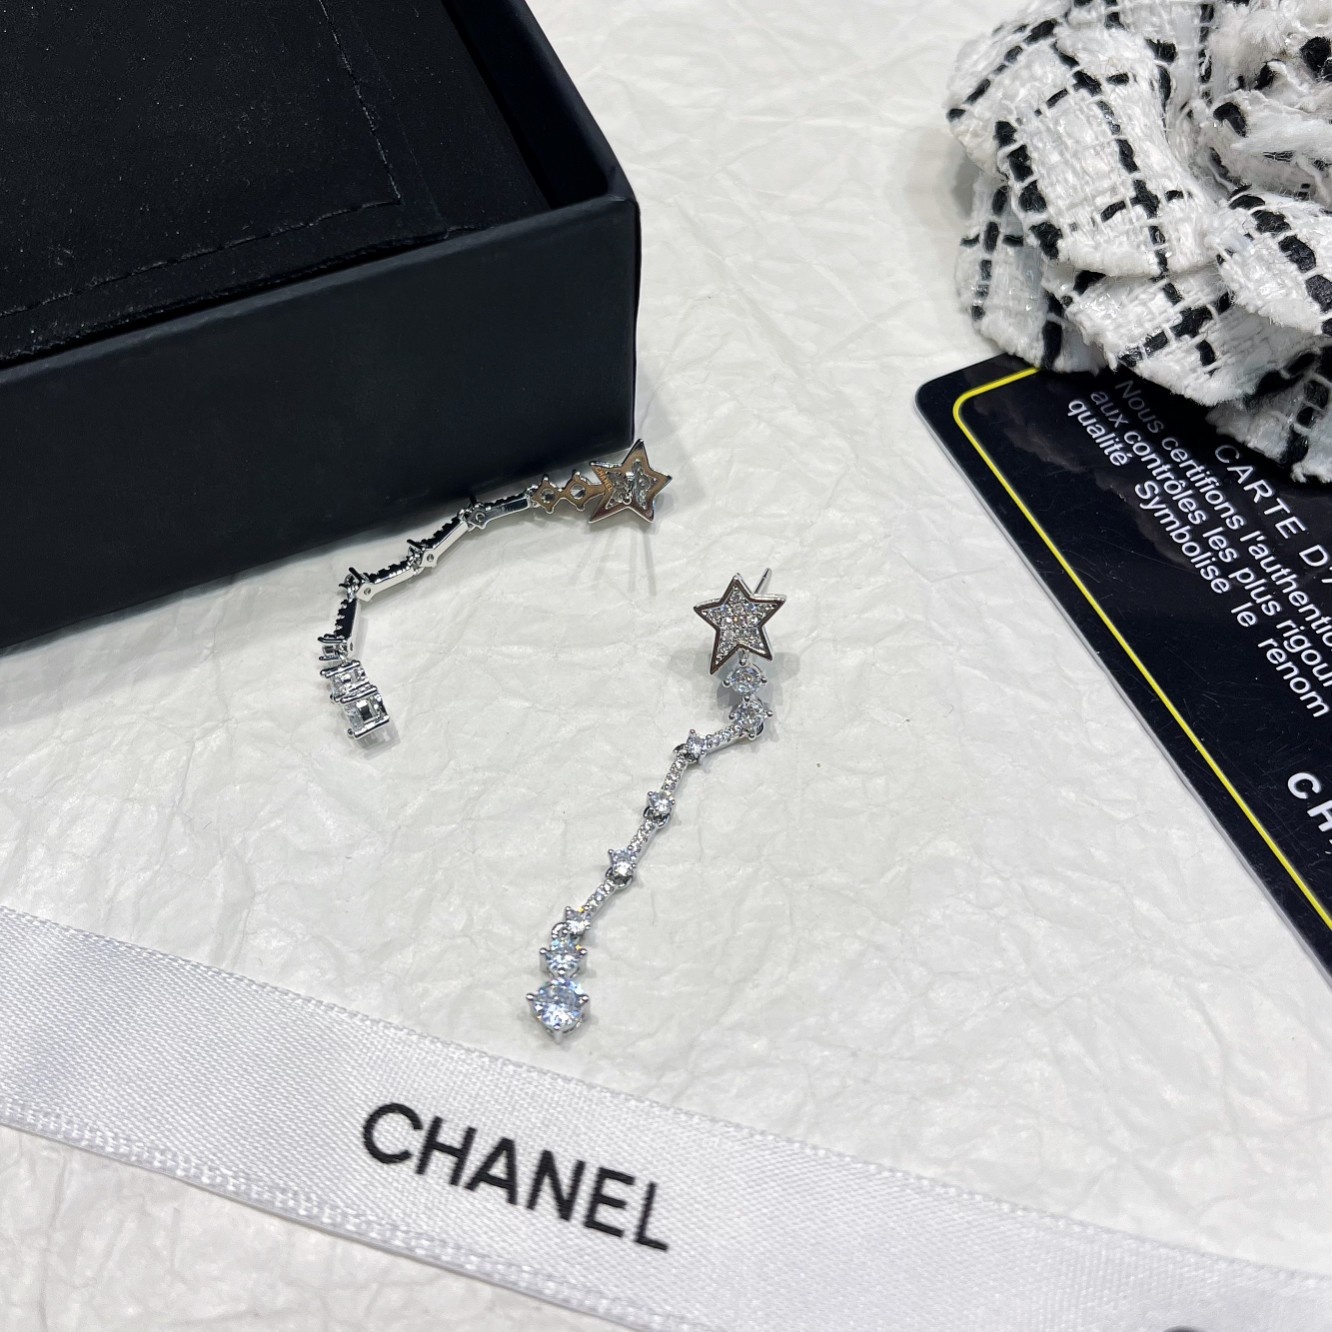 Chanel香奈儿中古双C耳钉小香家的款式真心无需多介绍每一款都超好看精致大方非常显气质.